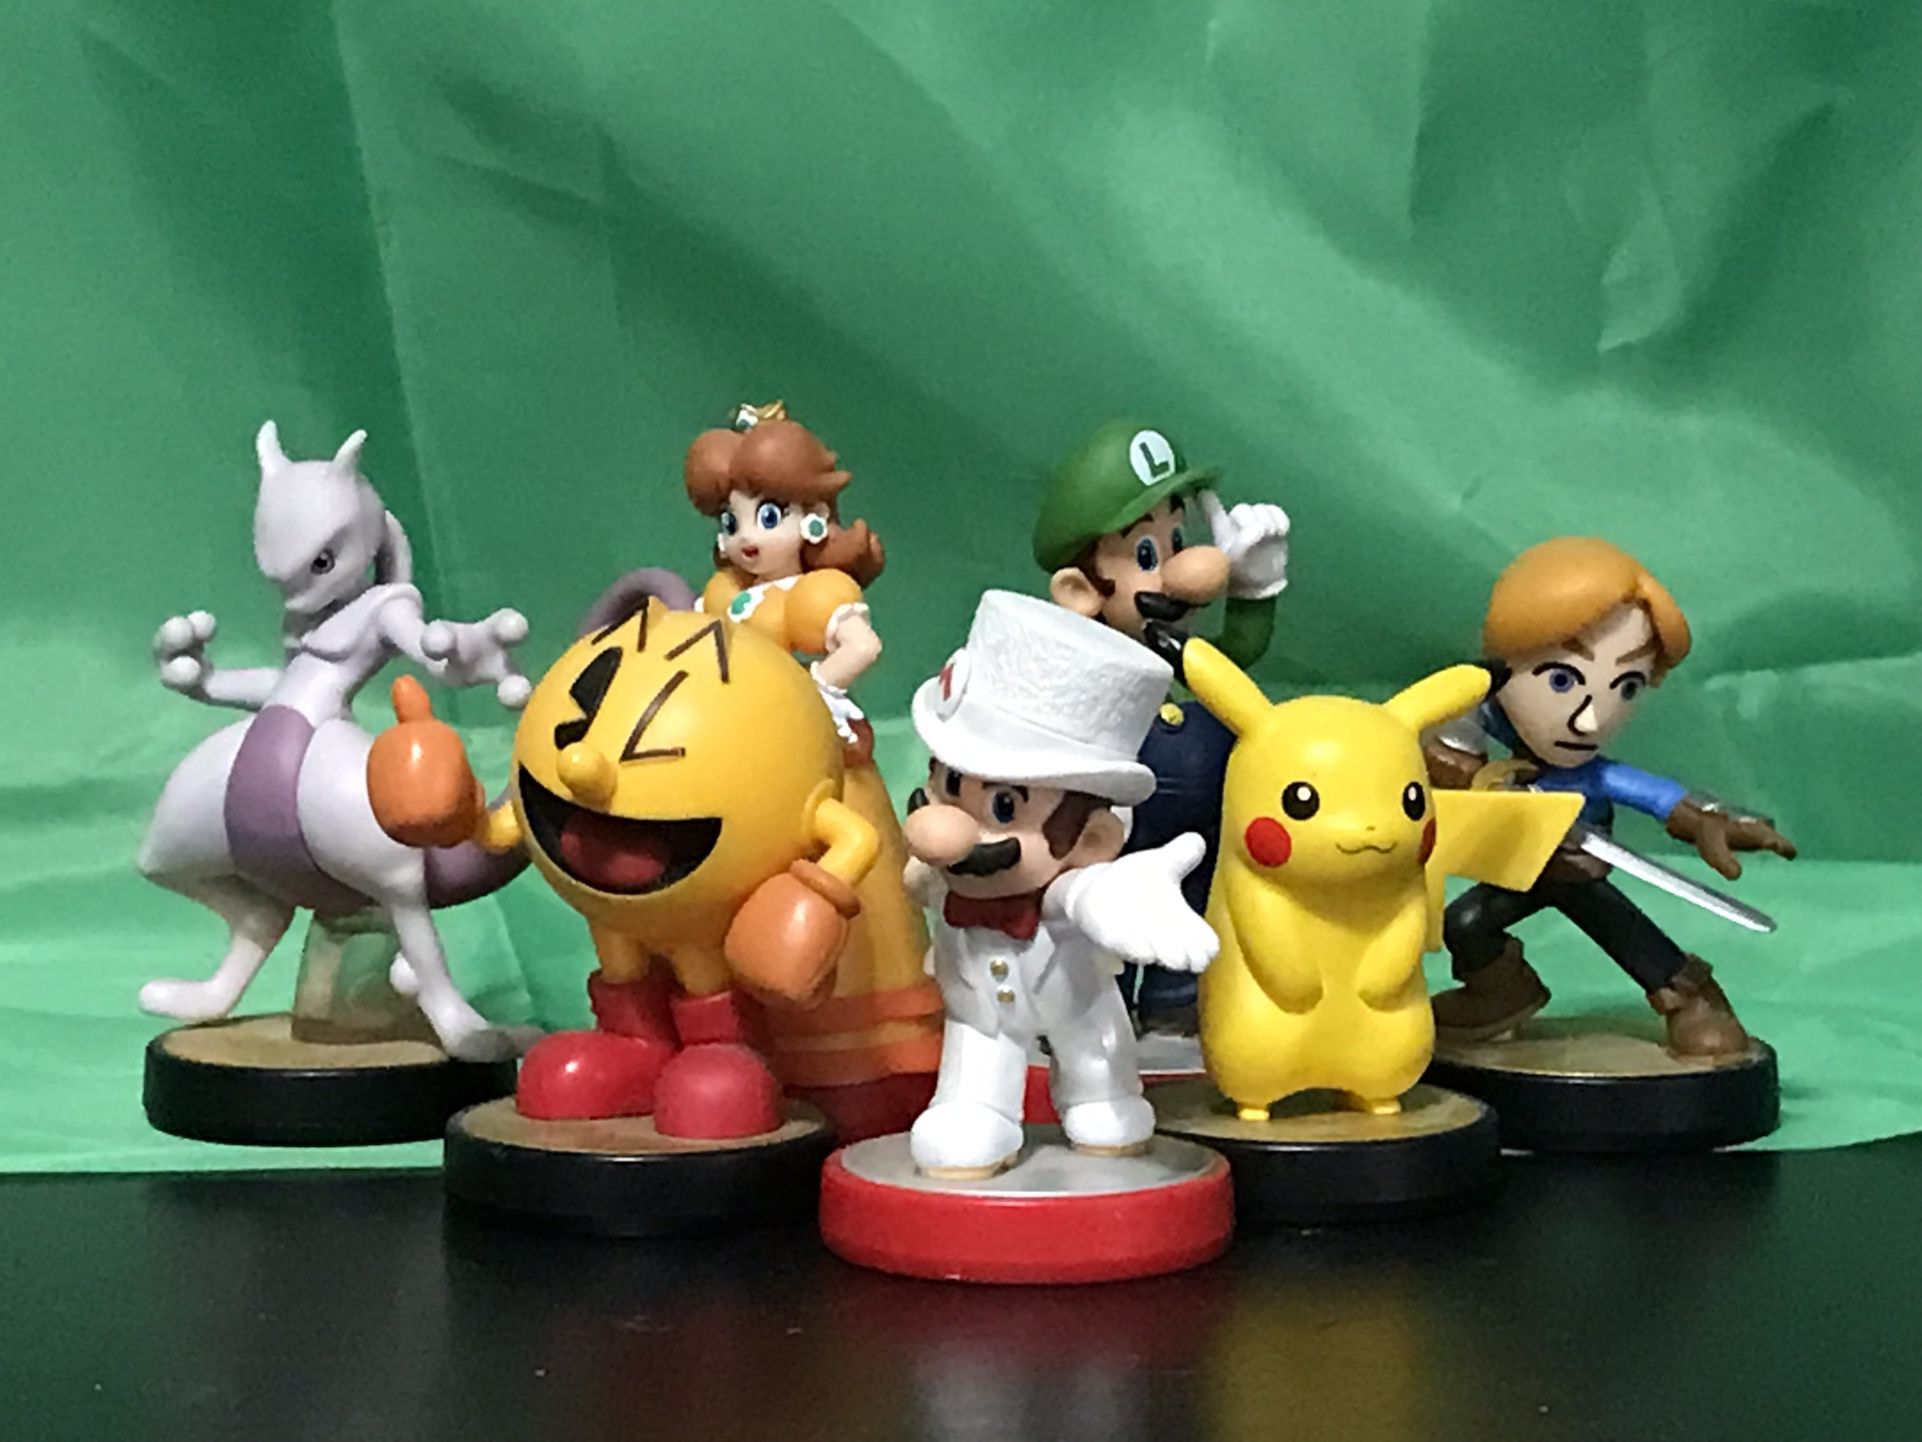 (READ DESCRIPTION) Rare Cheap Nintendo Amiibo Mario Pokémon Used Limited Edition Smash Bros Switch Pikachu Pac-Man Collectible Figure